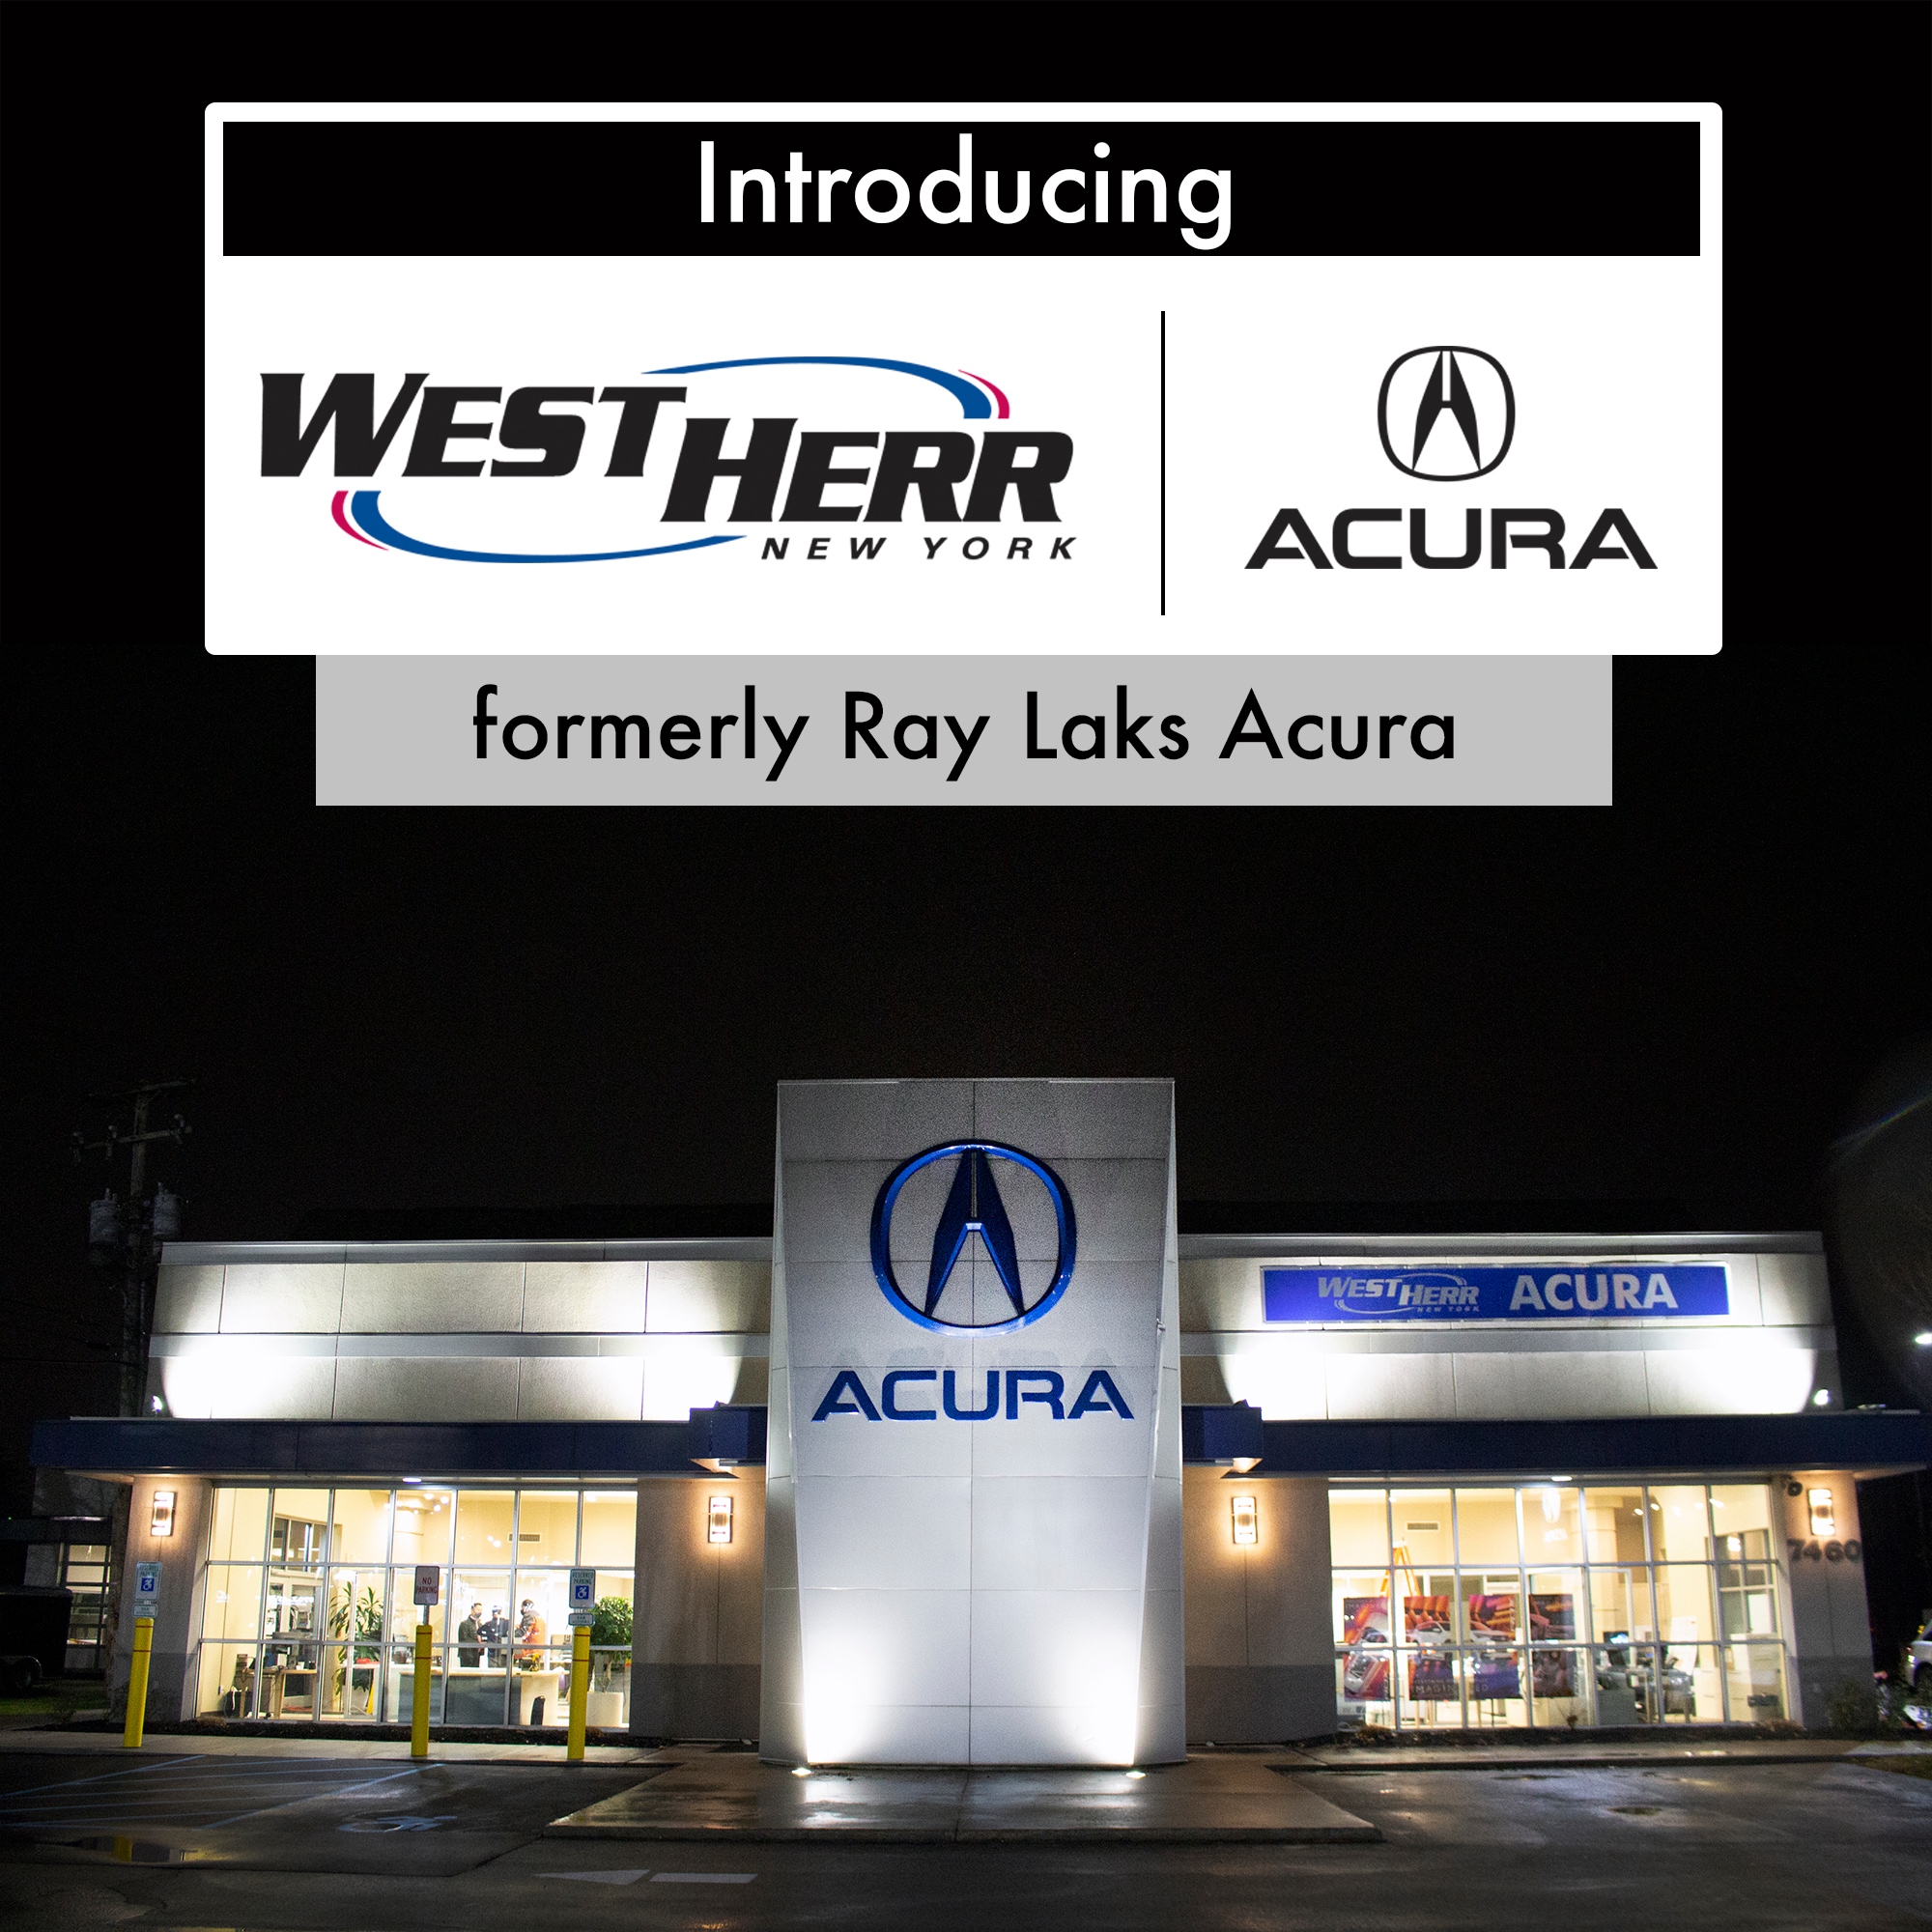 West Herr Auto Group - Ray Laks Acura staffRay Laks Acura storefront